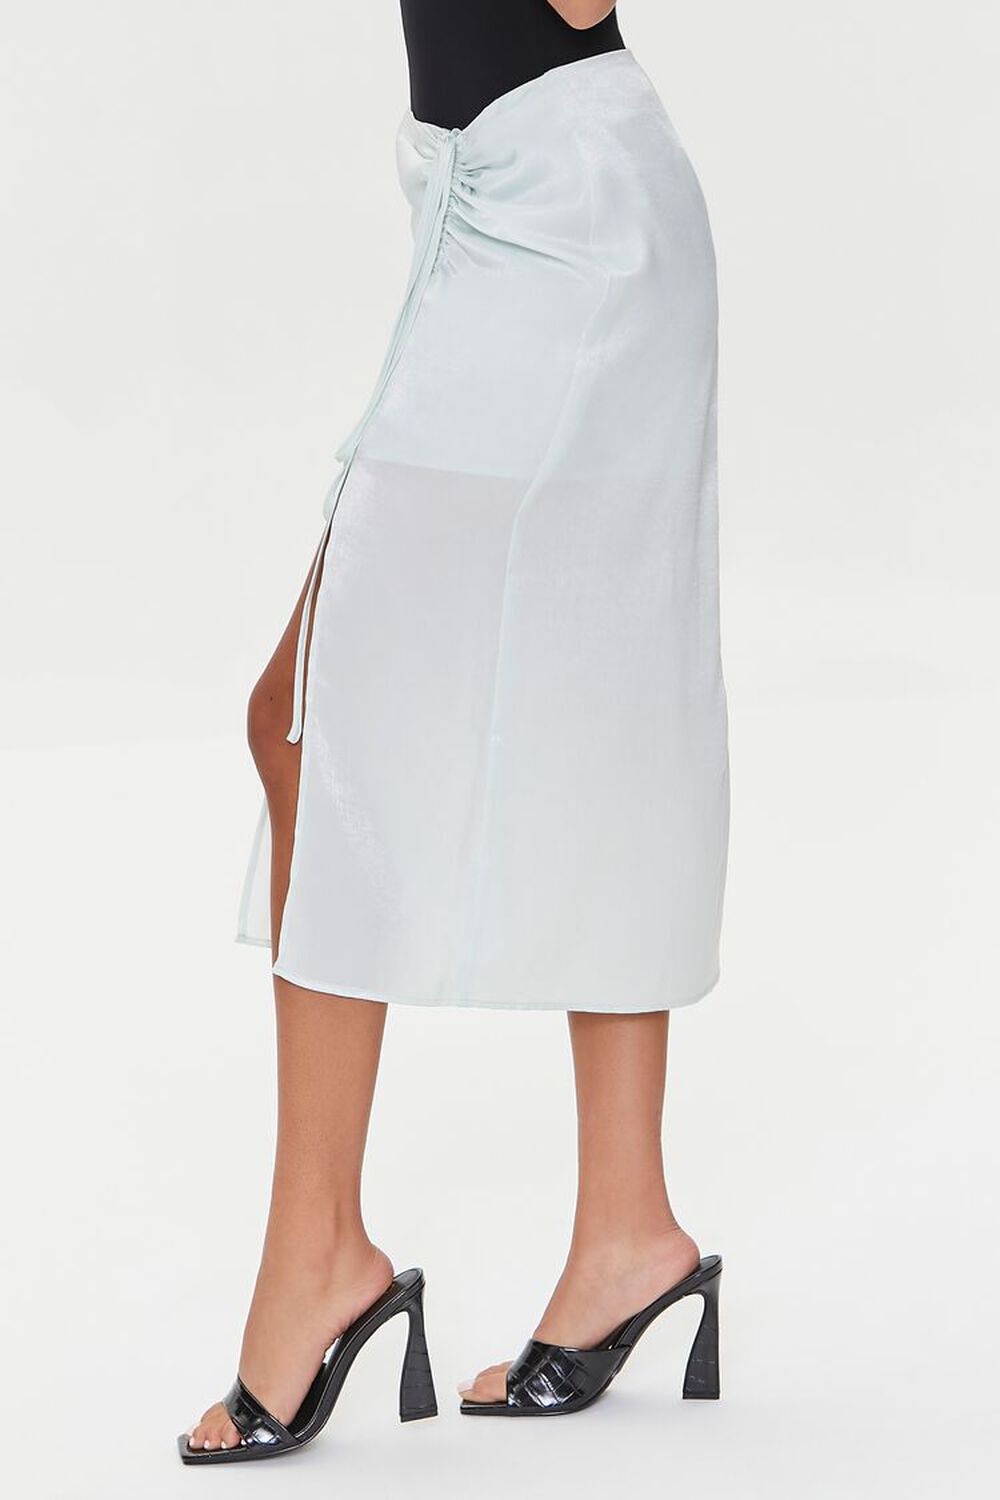 MINT Satin Ruched Drawstring Skirt, image 3